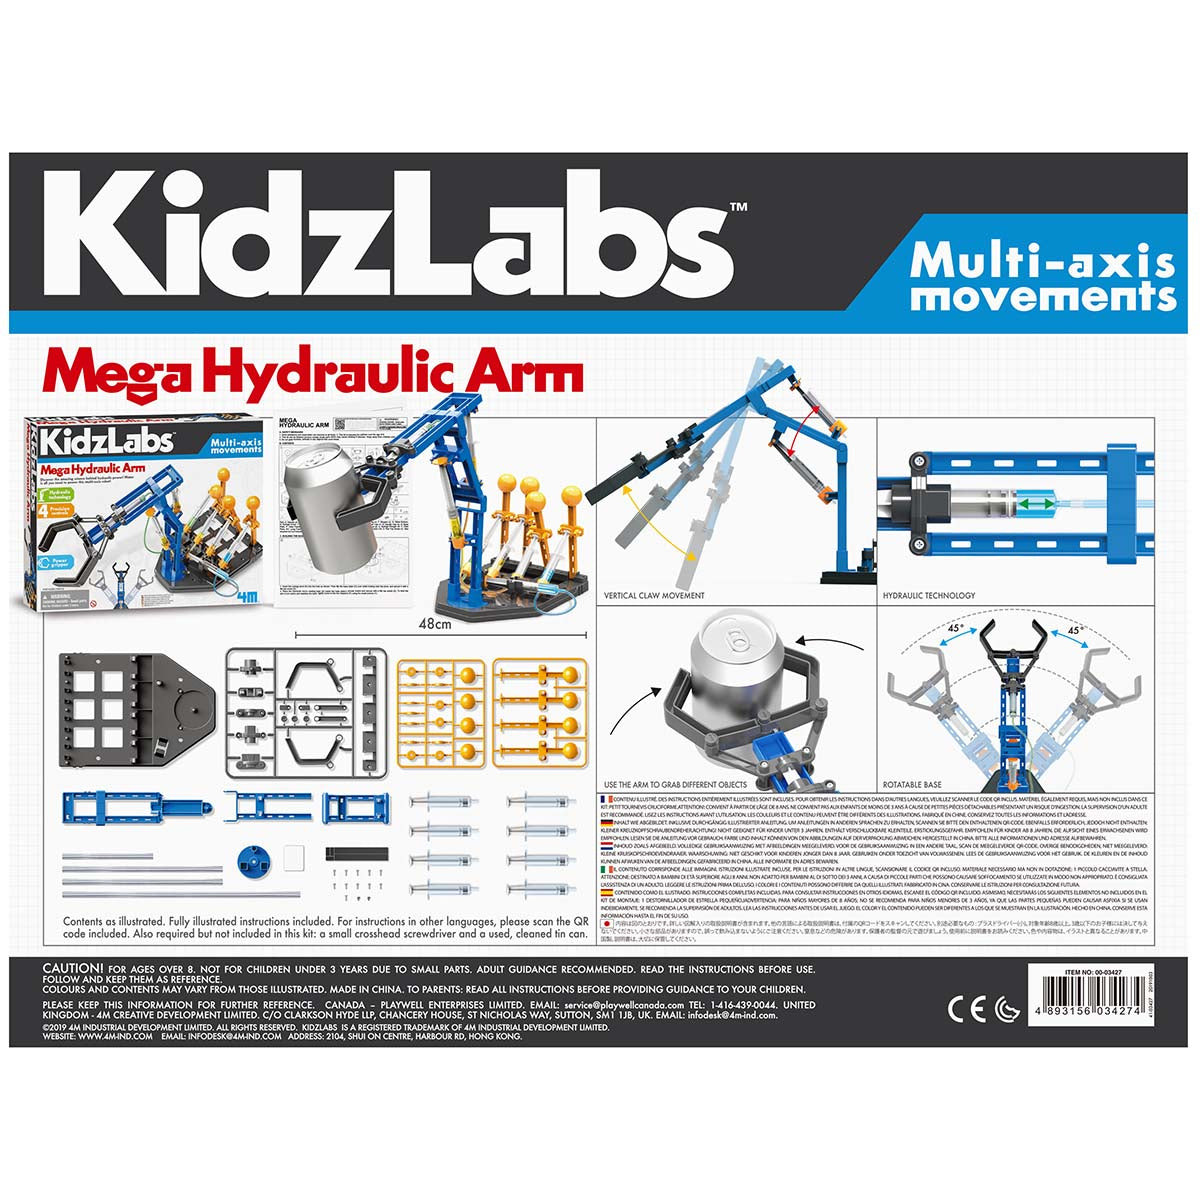 KidzLabs Mega Hydraulic Arm